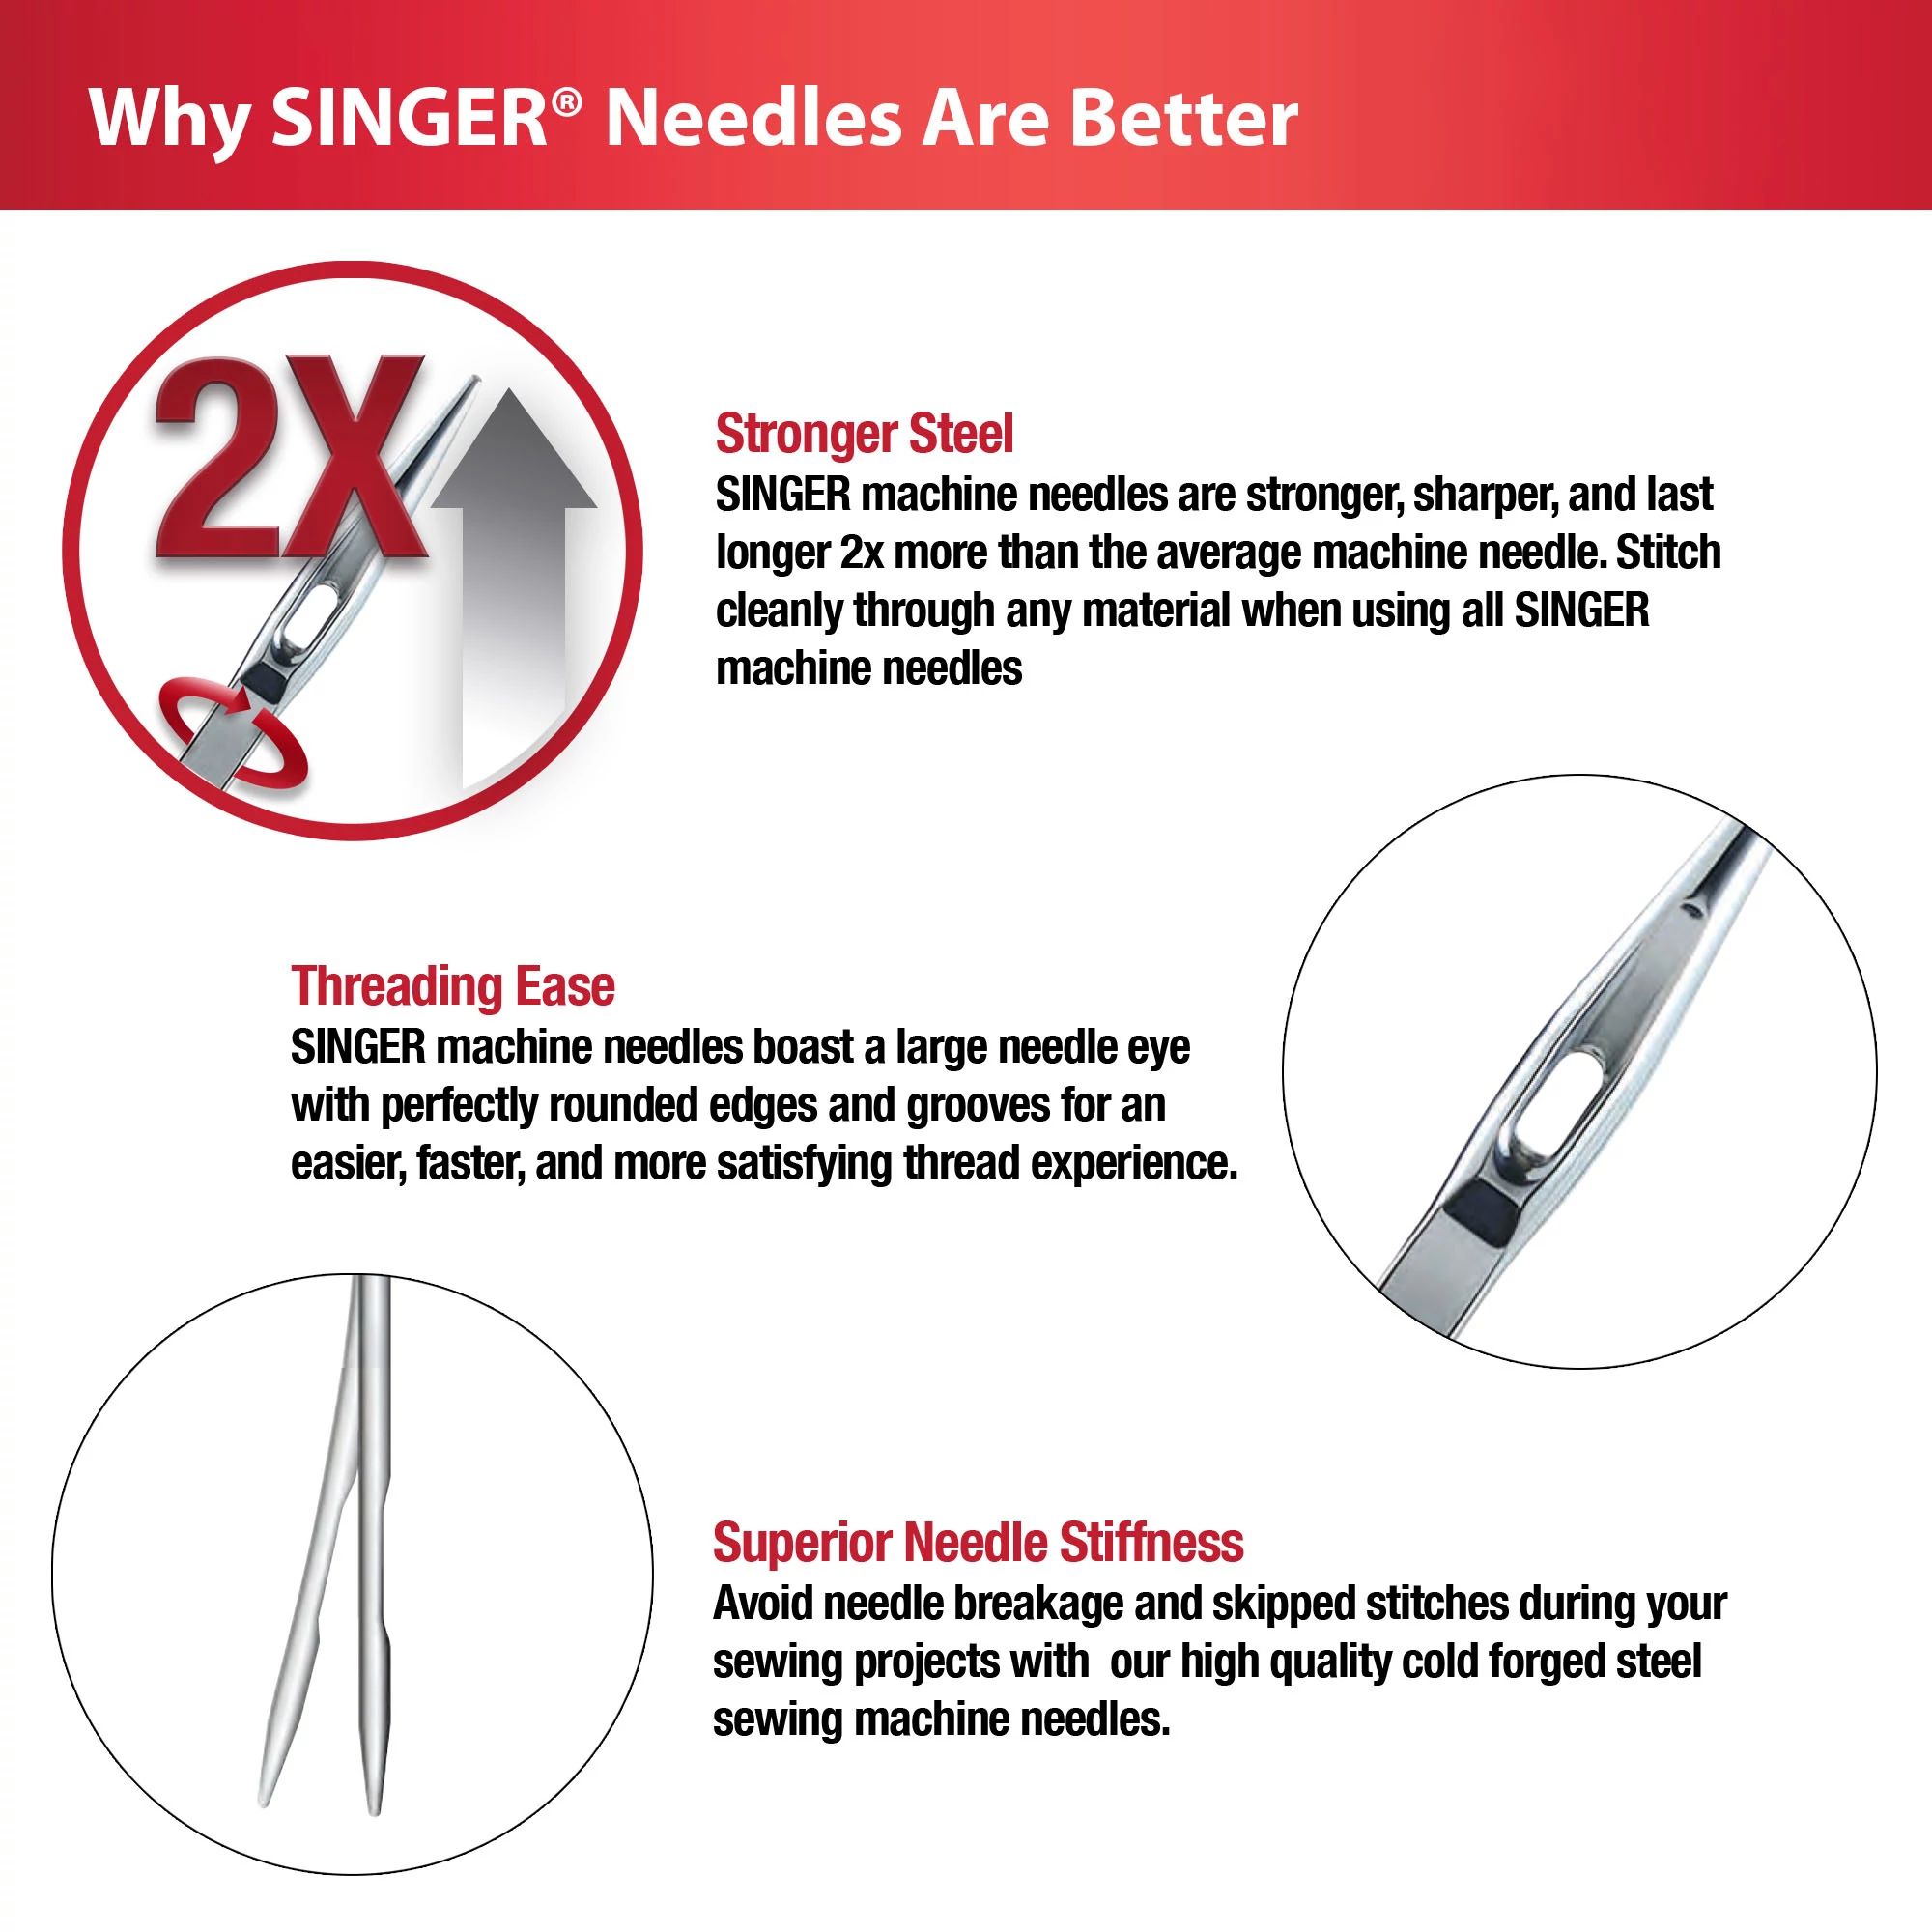 SINGER® Size 100/16 Denim Sewing Machine Needles, 5ct.